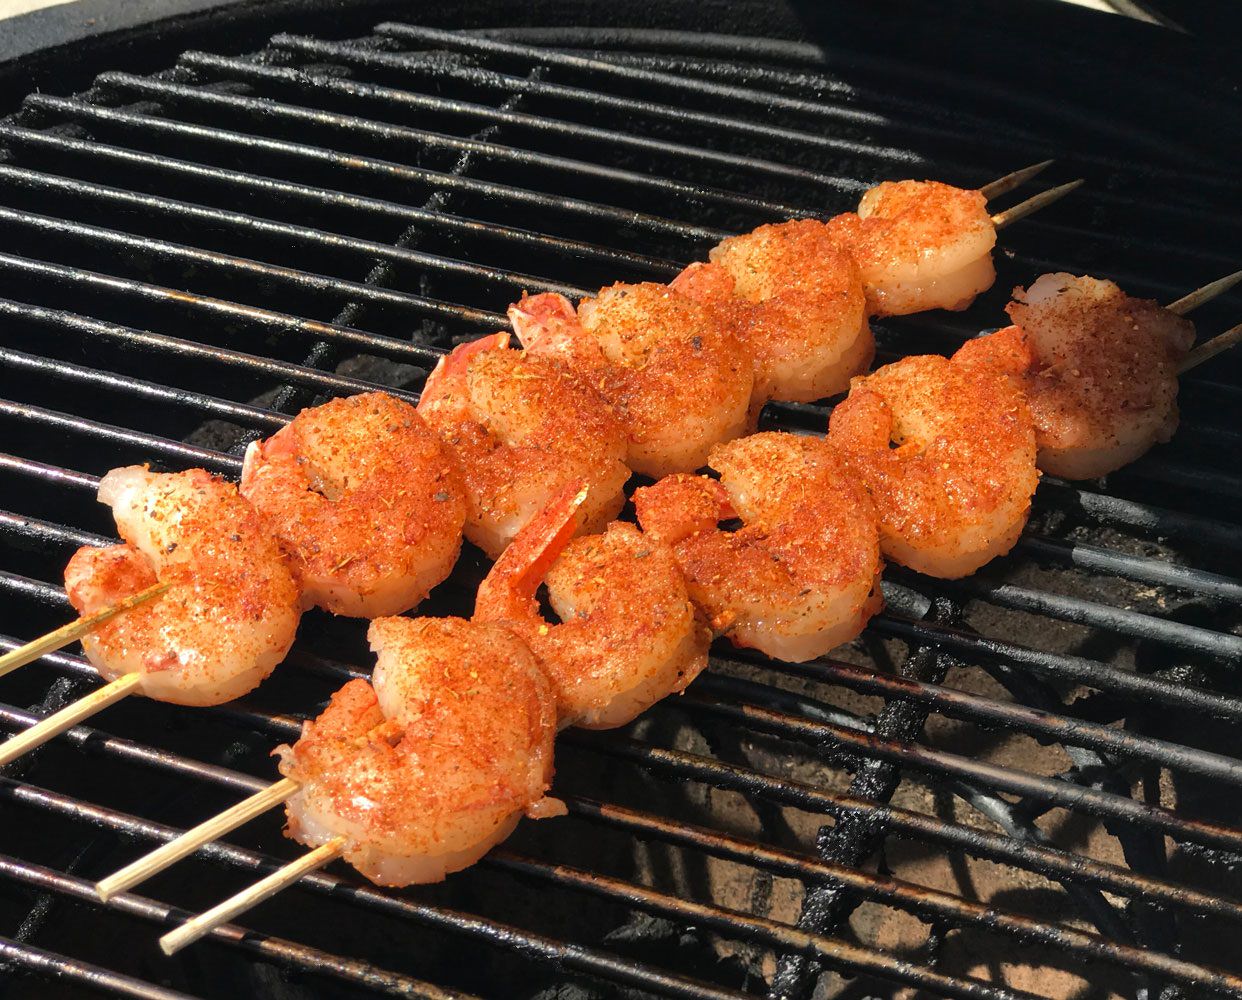 Grill shrimp skewers for 2-4 minutes